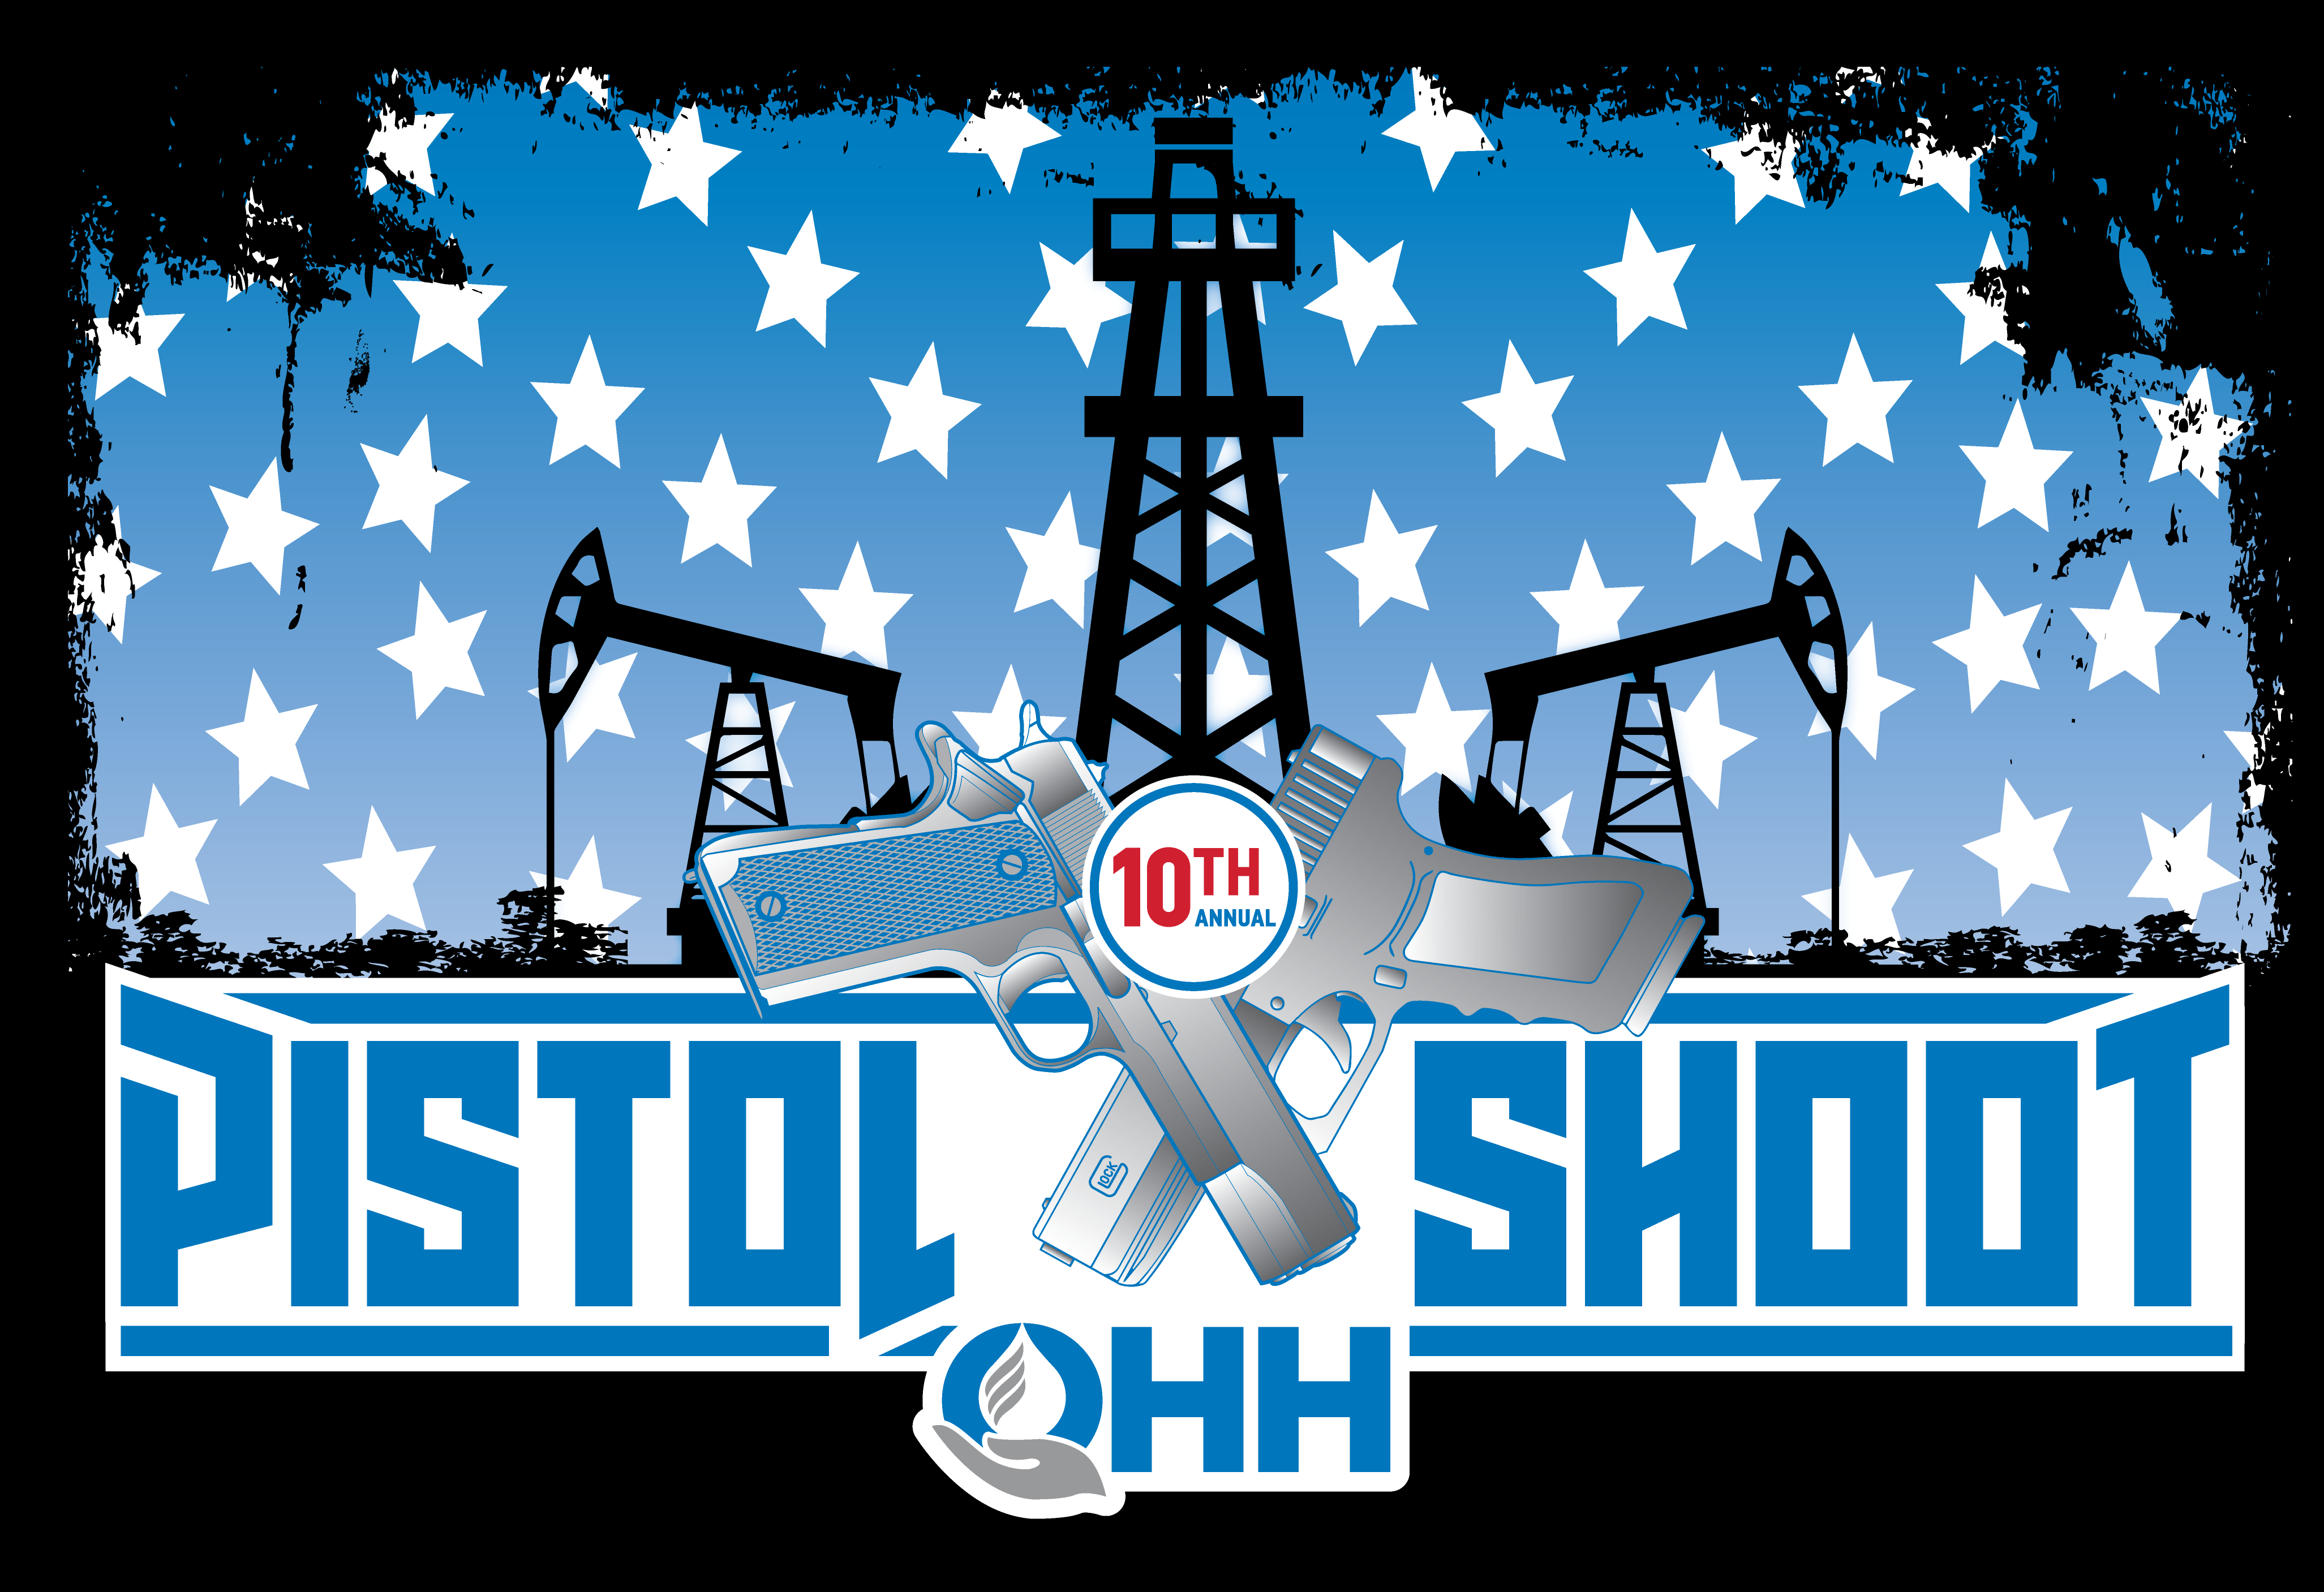 Pistol - Hands Oilfield Annual Houston Helping Fun Winter 10th Shoot